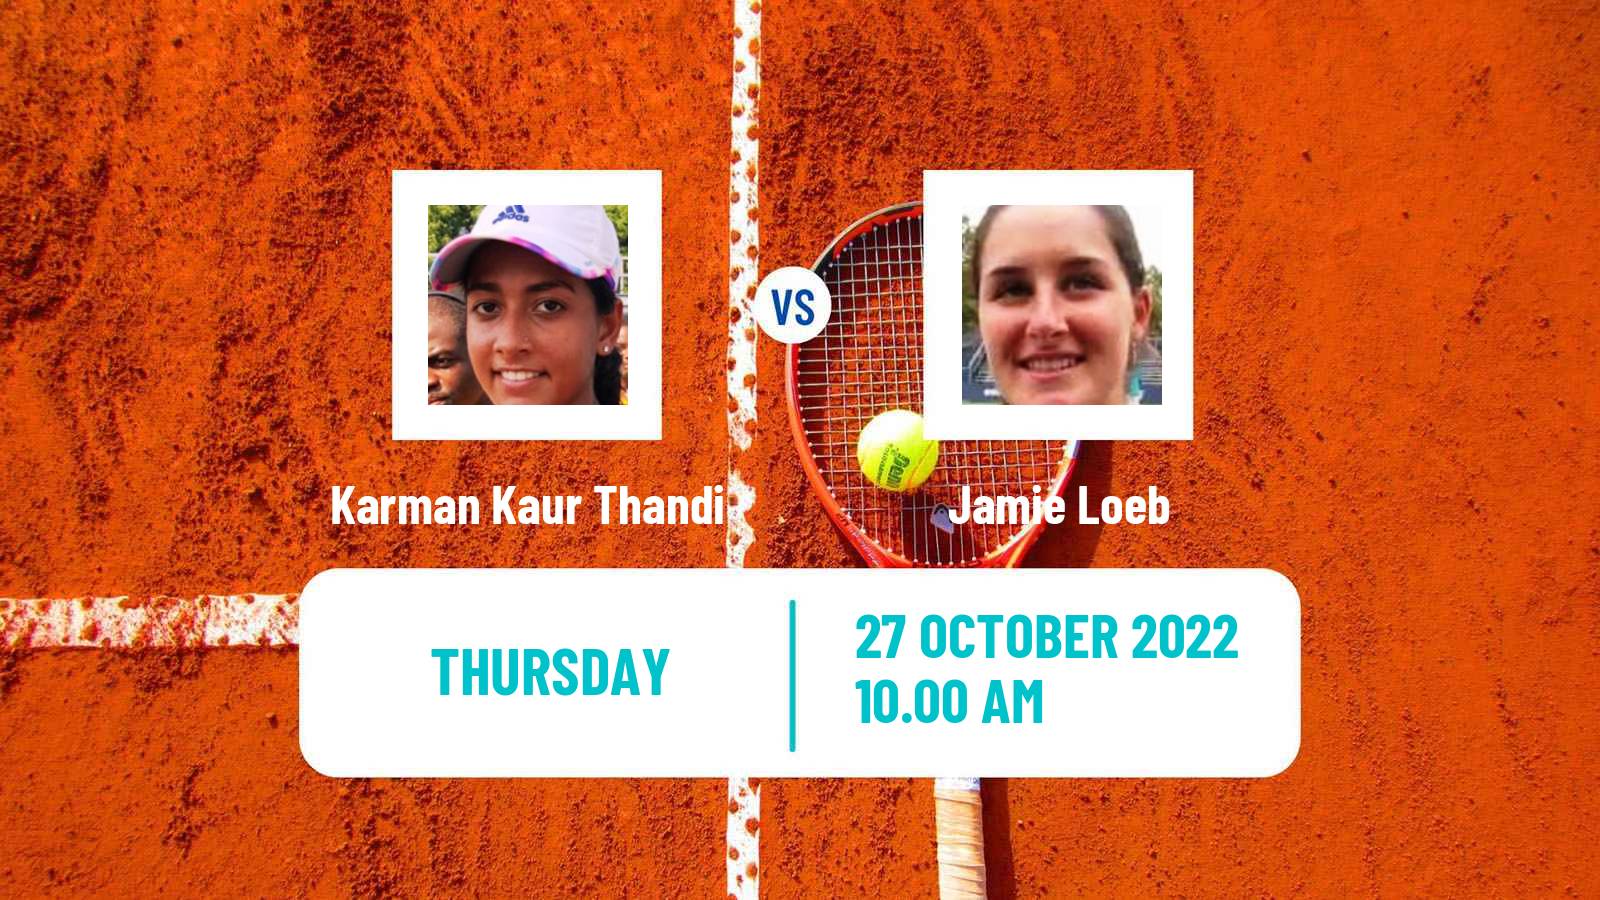 Tennis ITF Tournaments Karman Kaur Thandi - Jamie Loeb